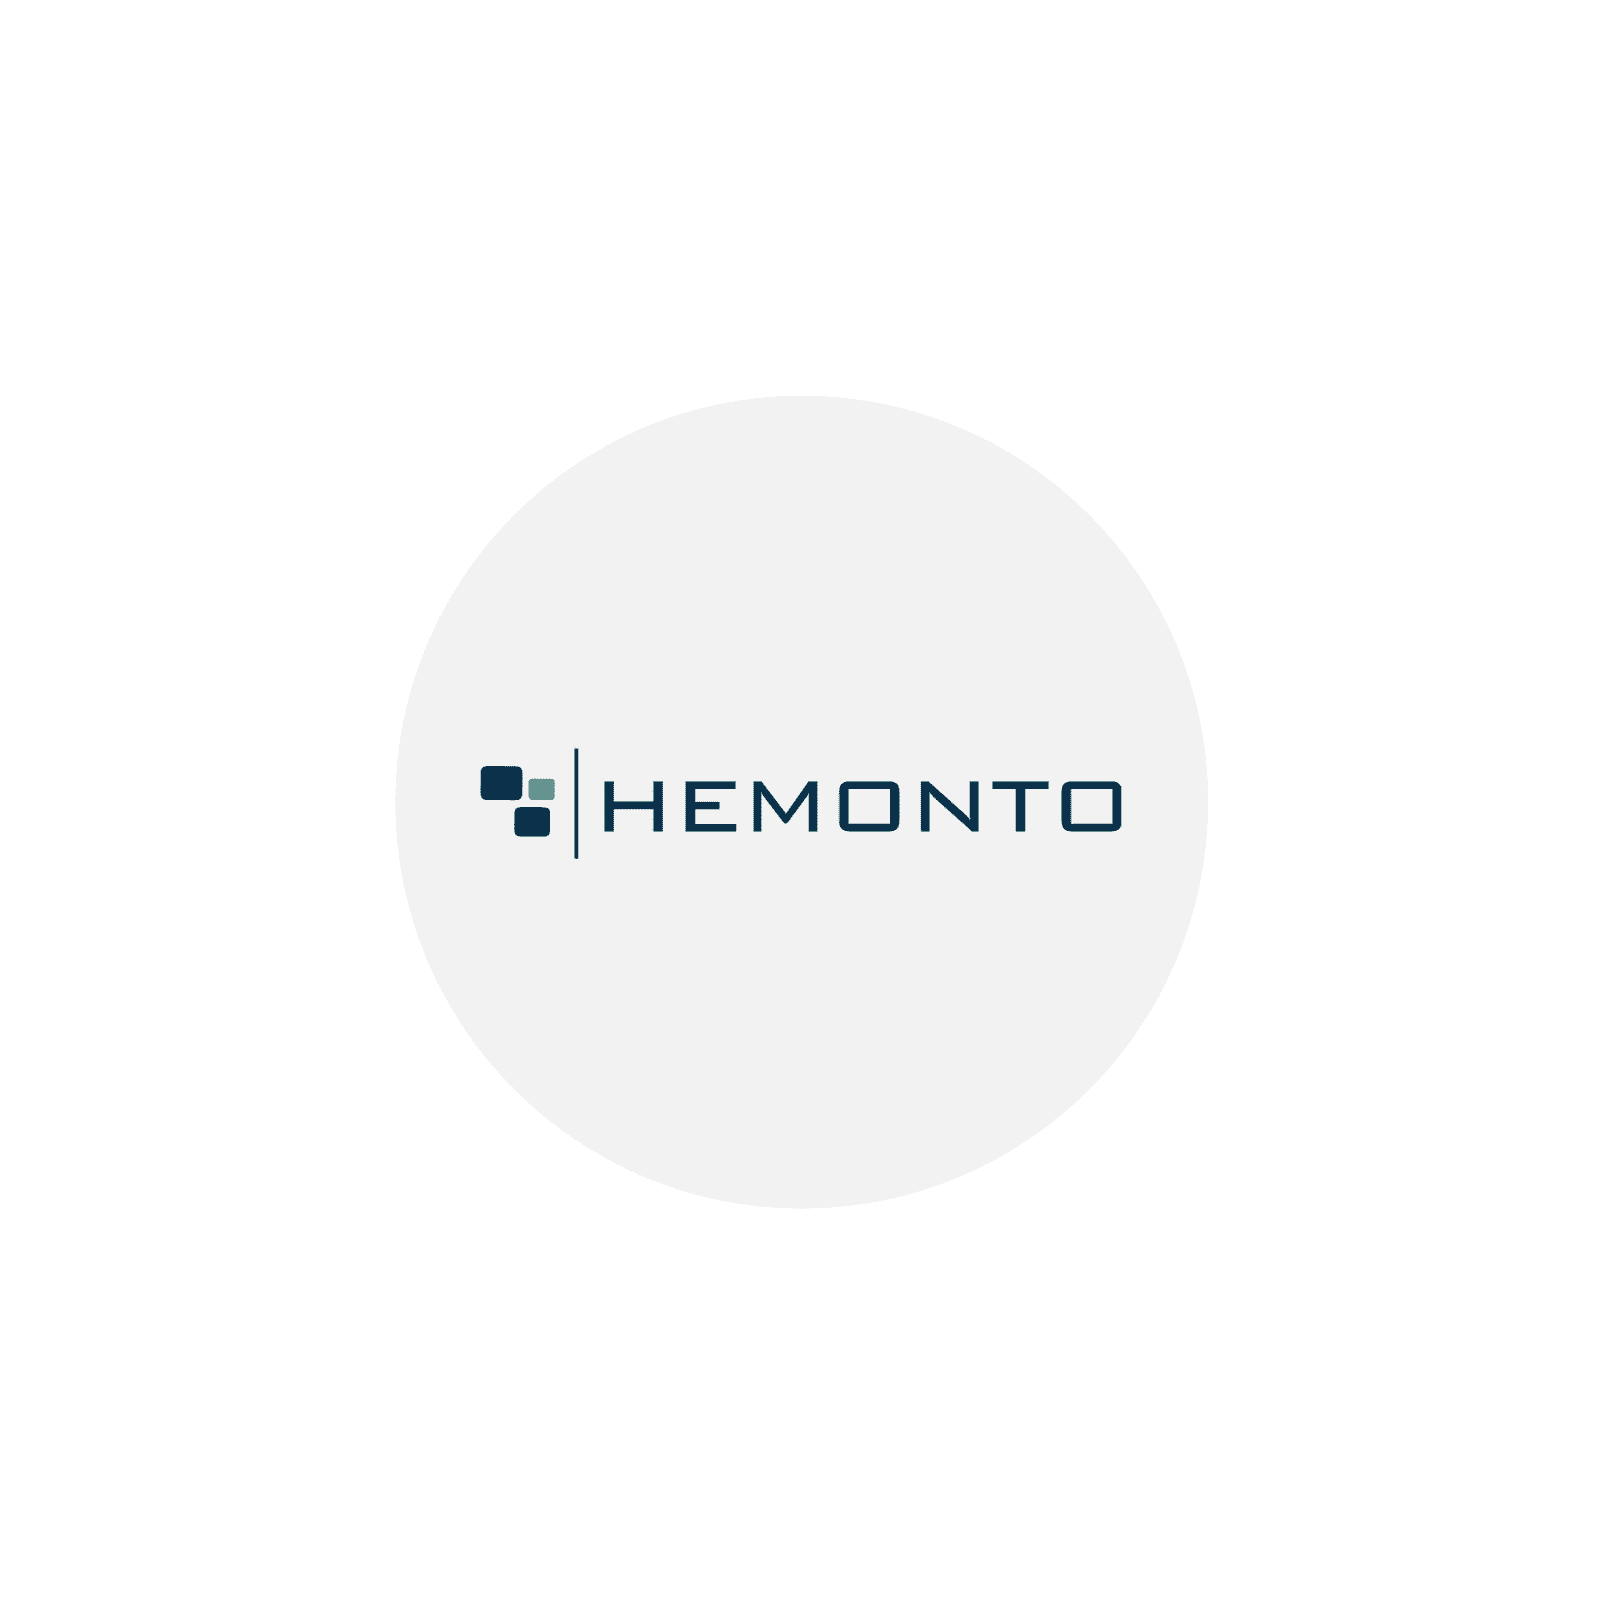 Hemonto blåt logo preview